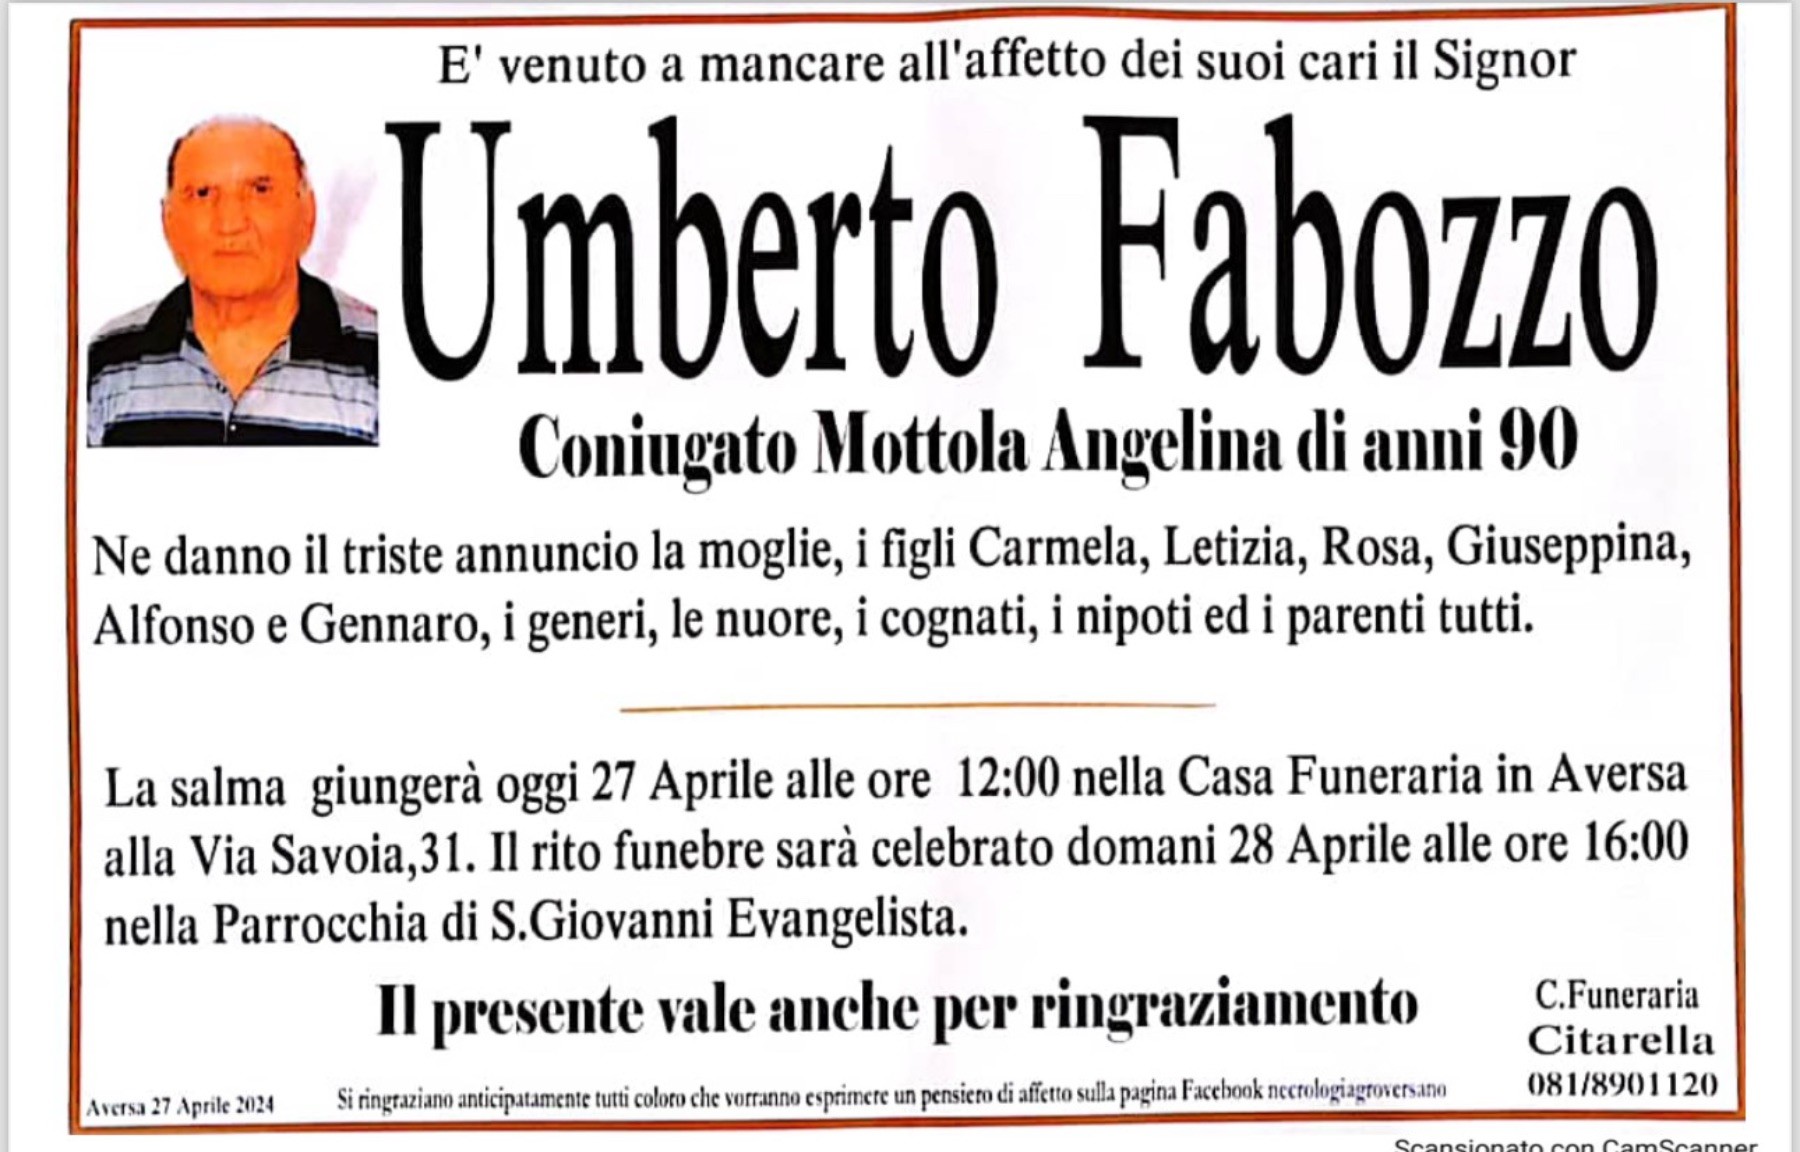 Umberto Fabozzo